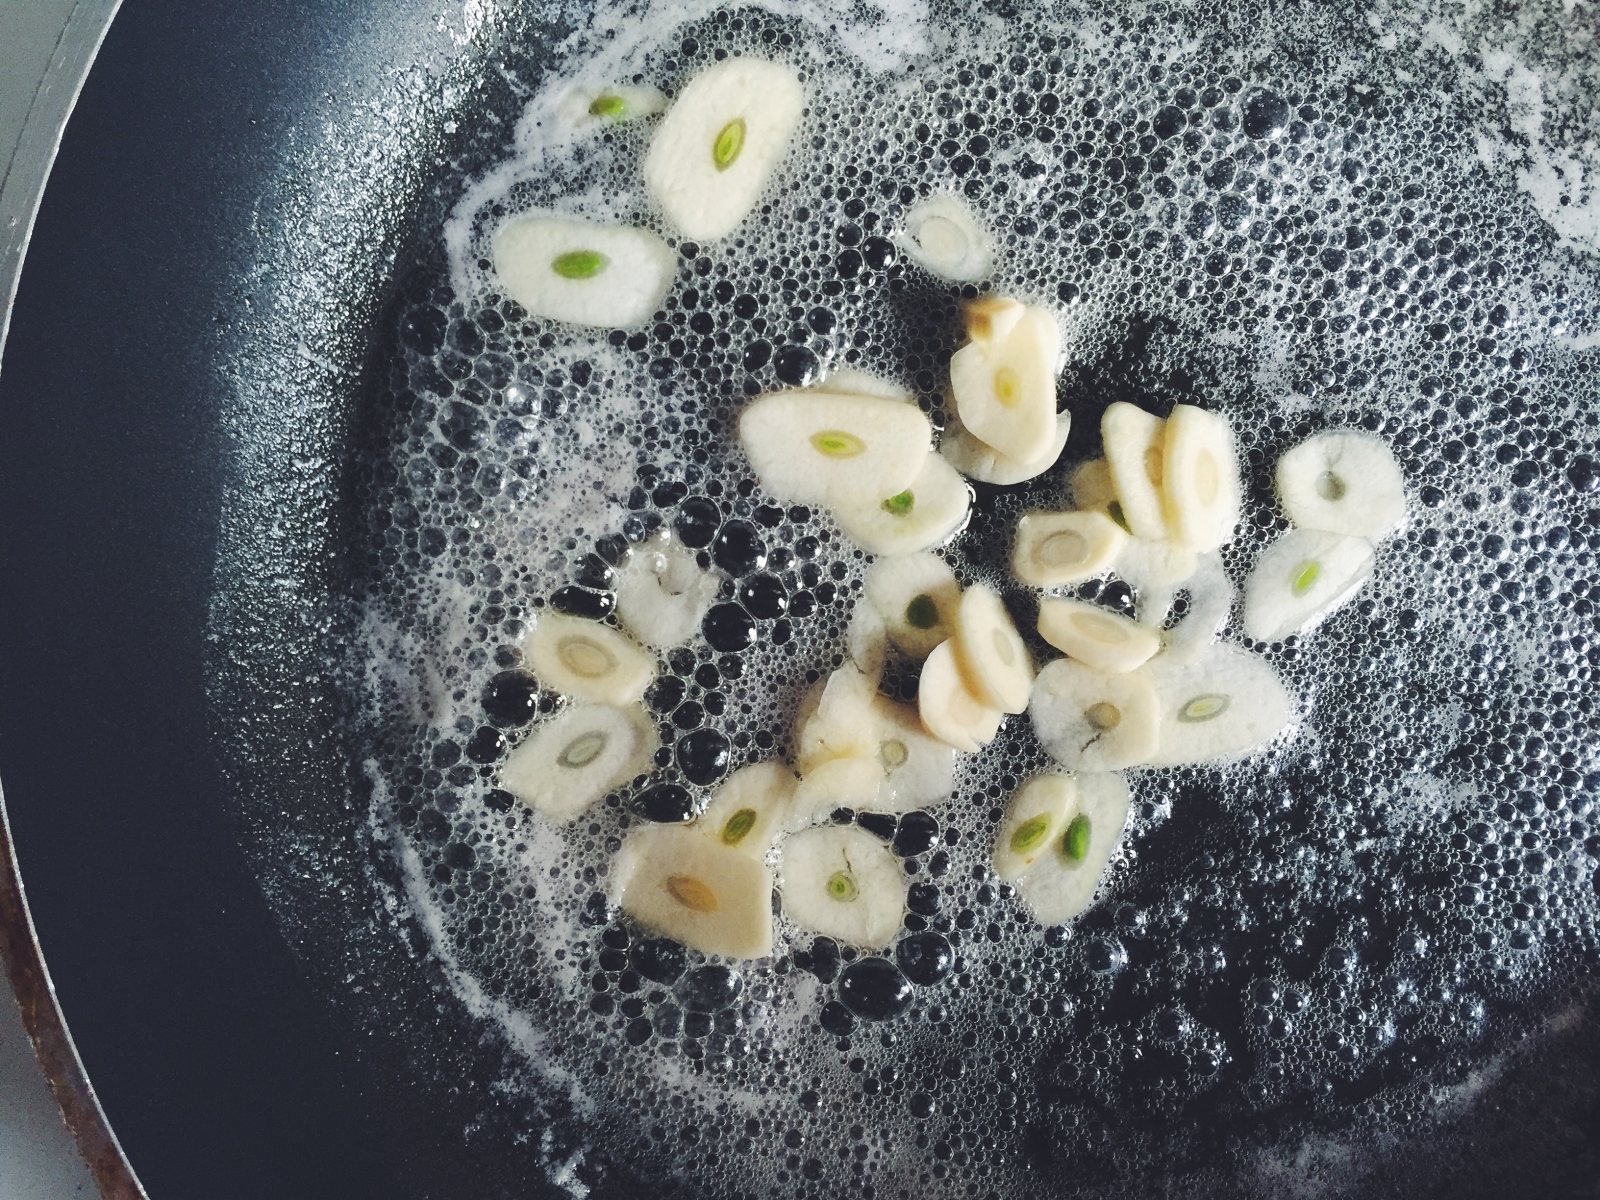 may-peas-garlic-cooking-20160425173401.jpg